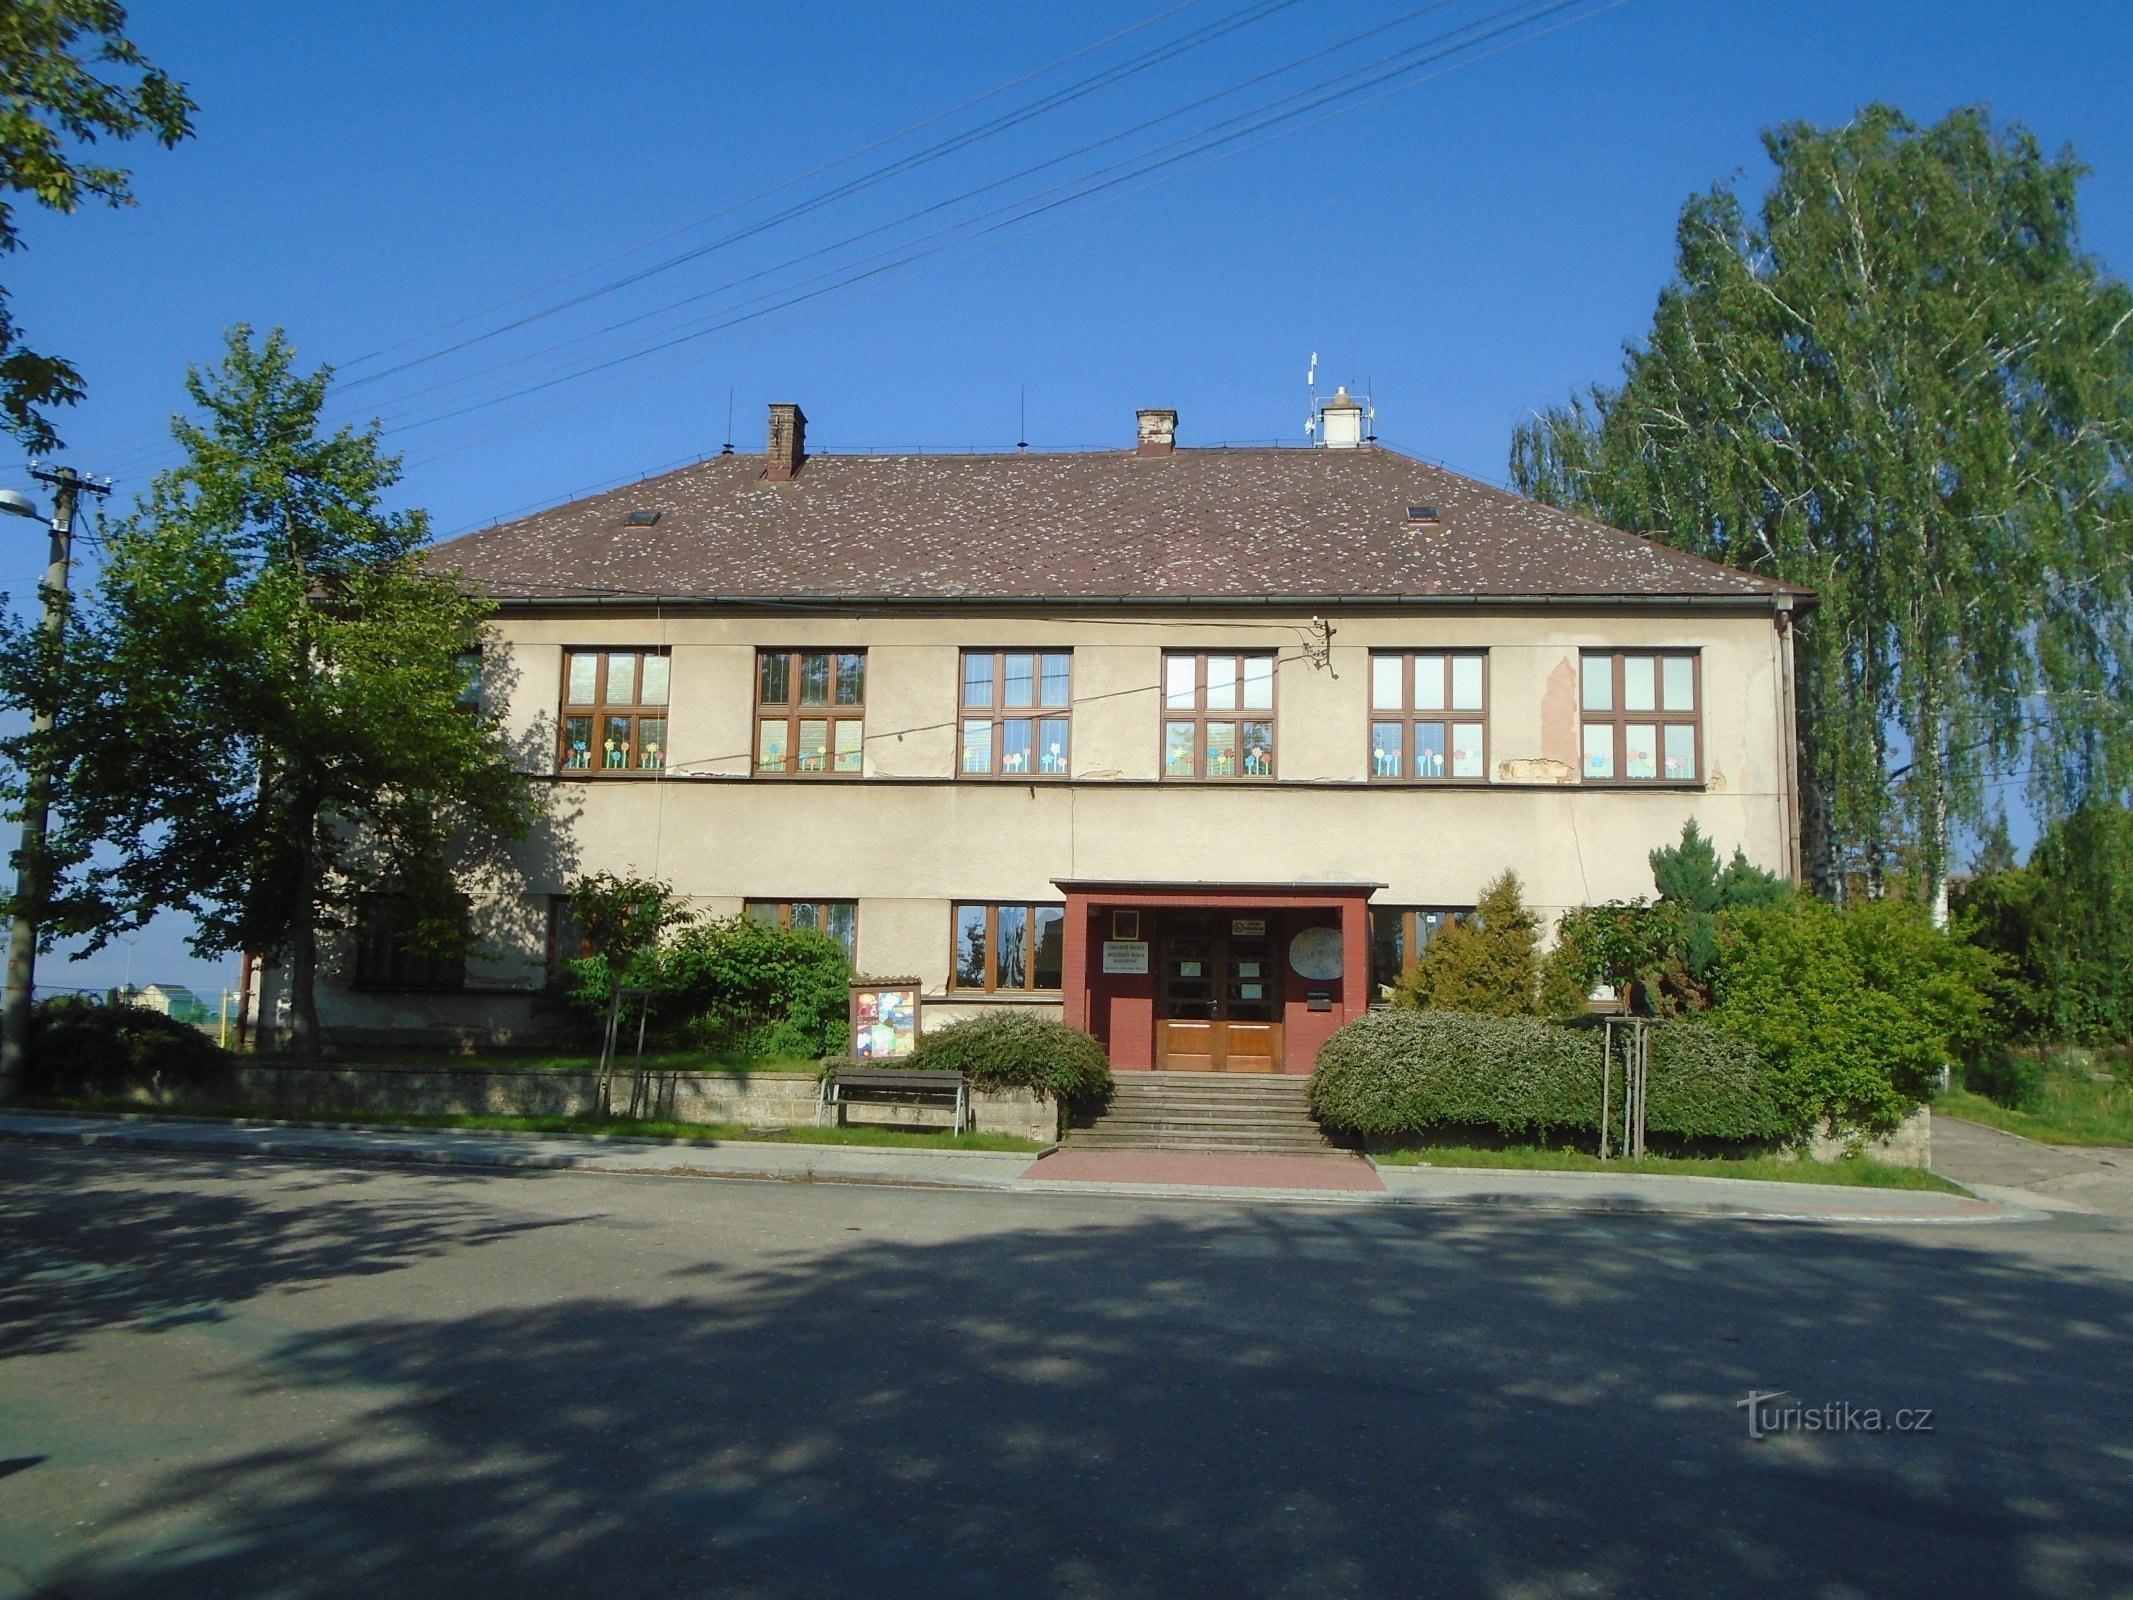 Iskola (Boharyné)